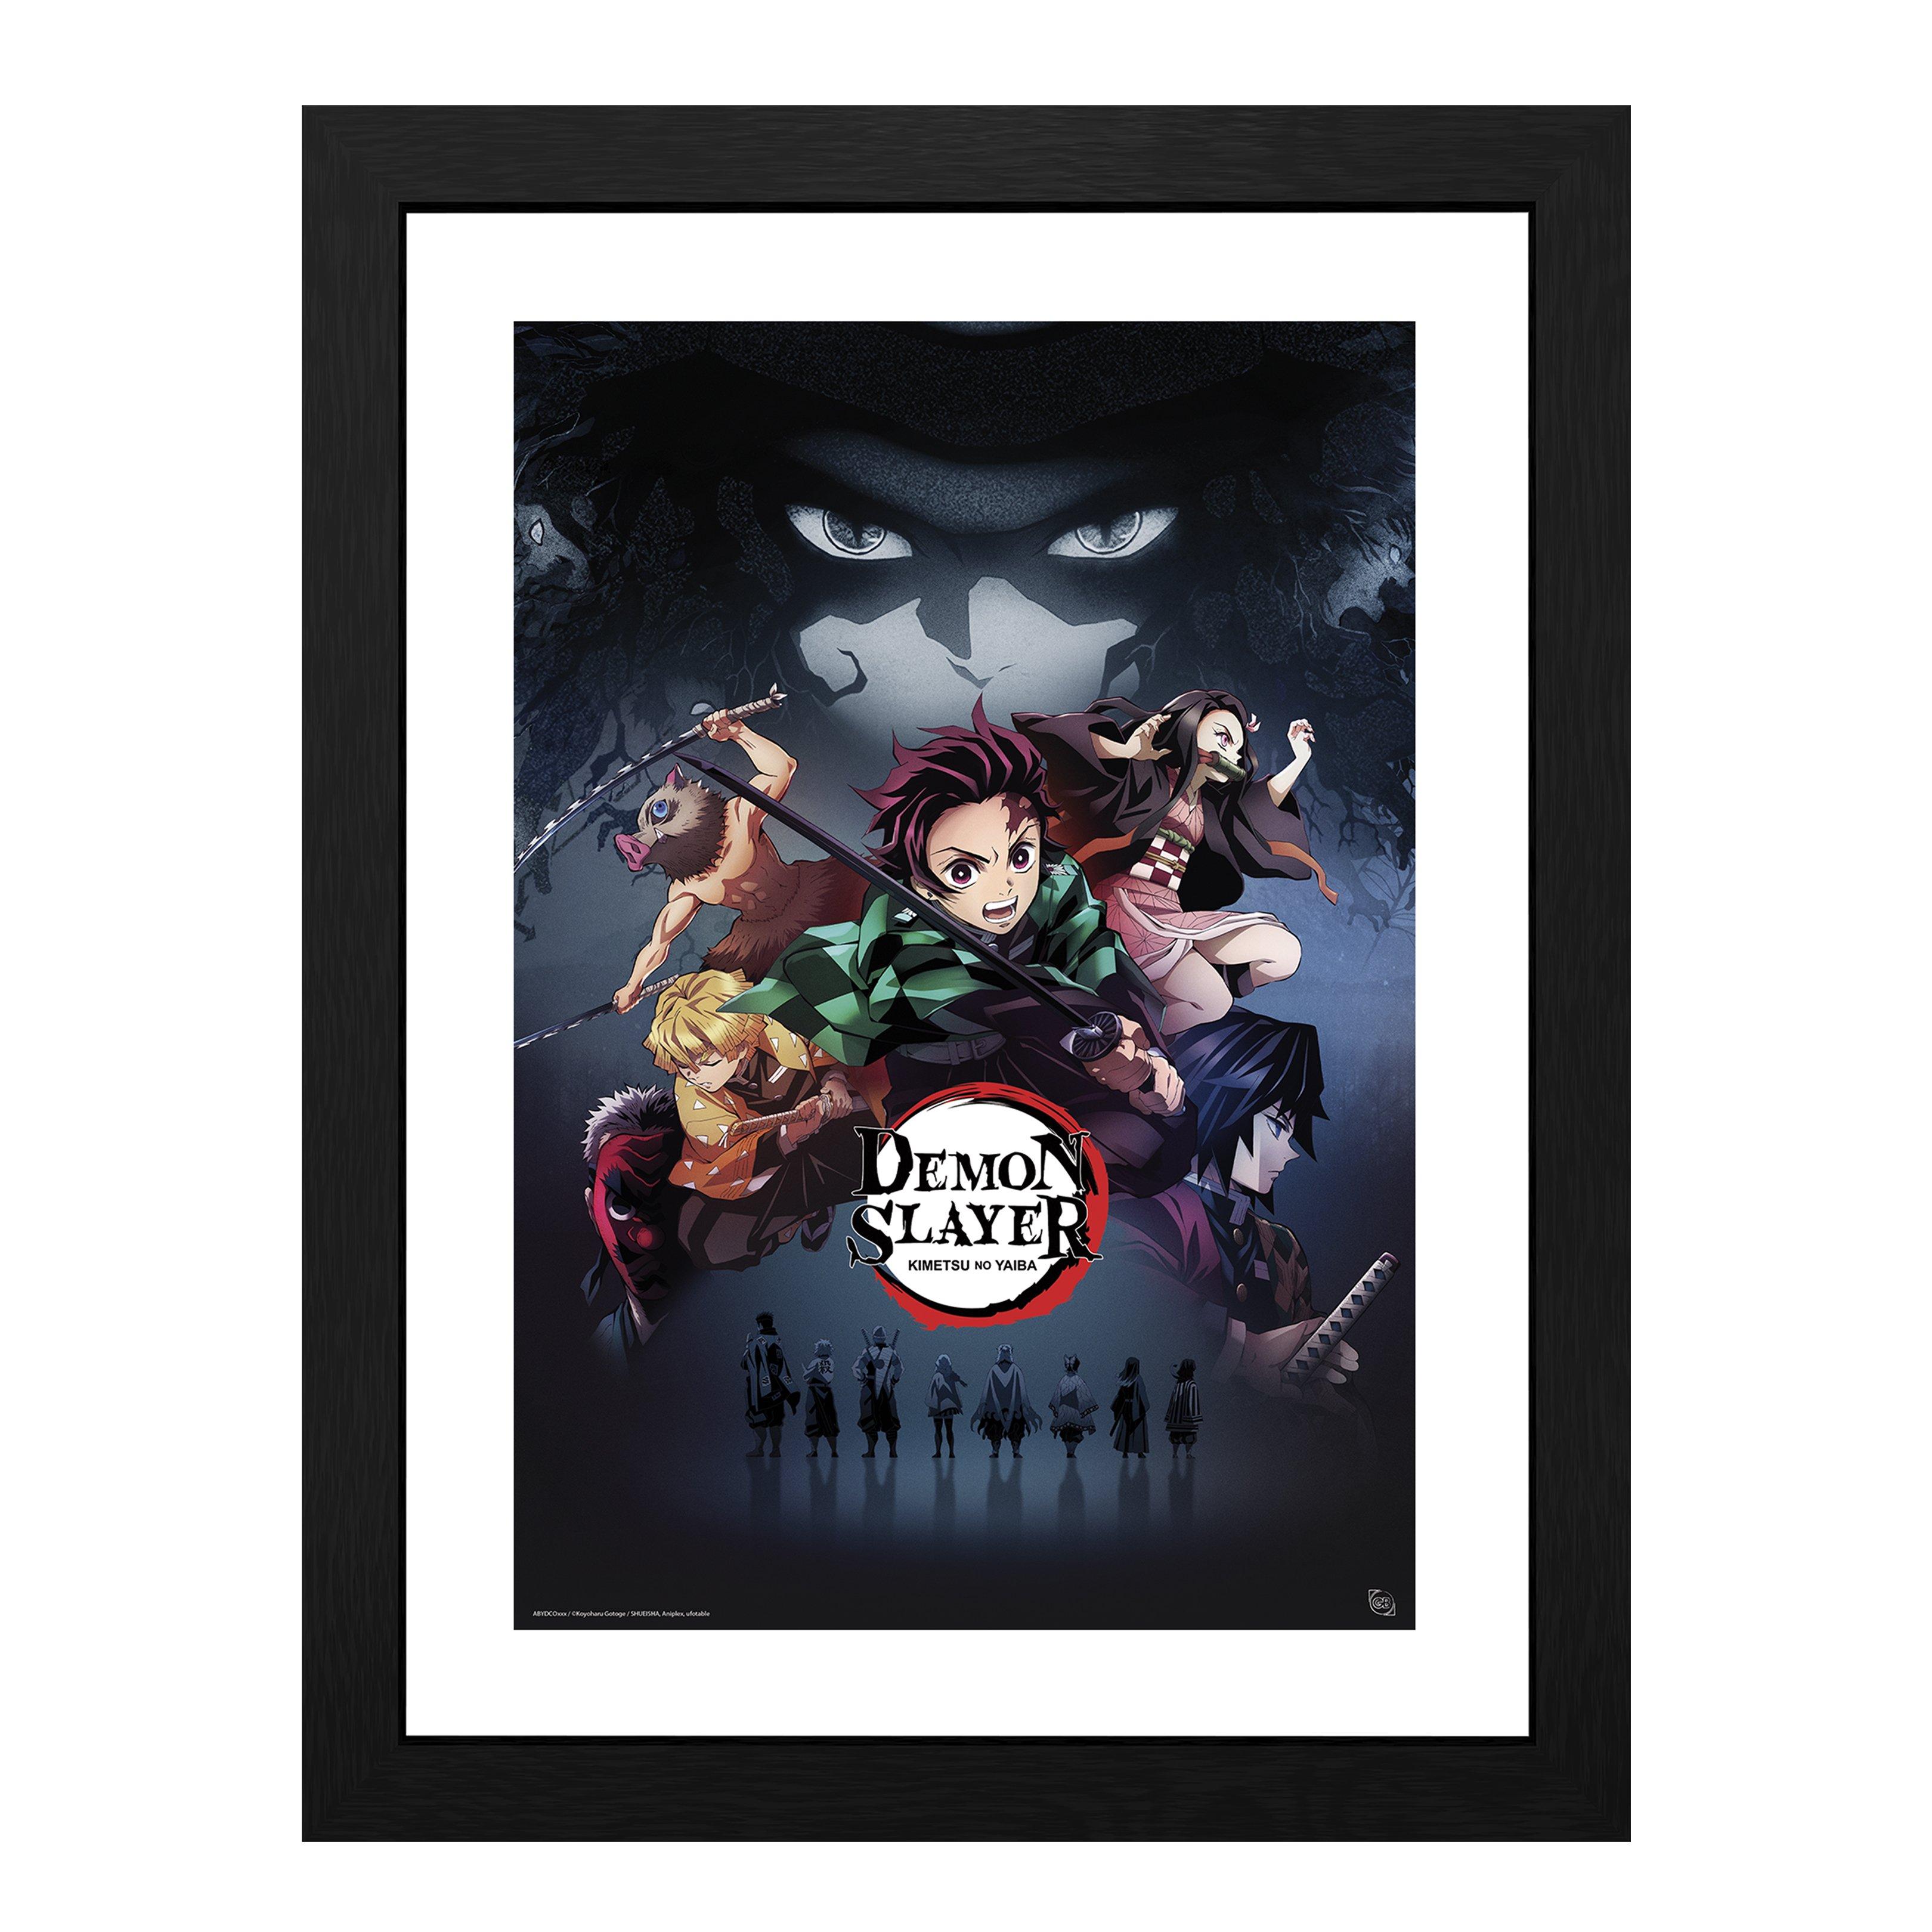 Big Poster Anime Demon Slayer Kimetsu no Yaiba LO03 90x60 cm